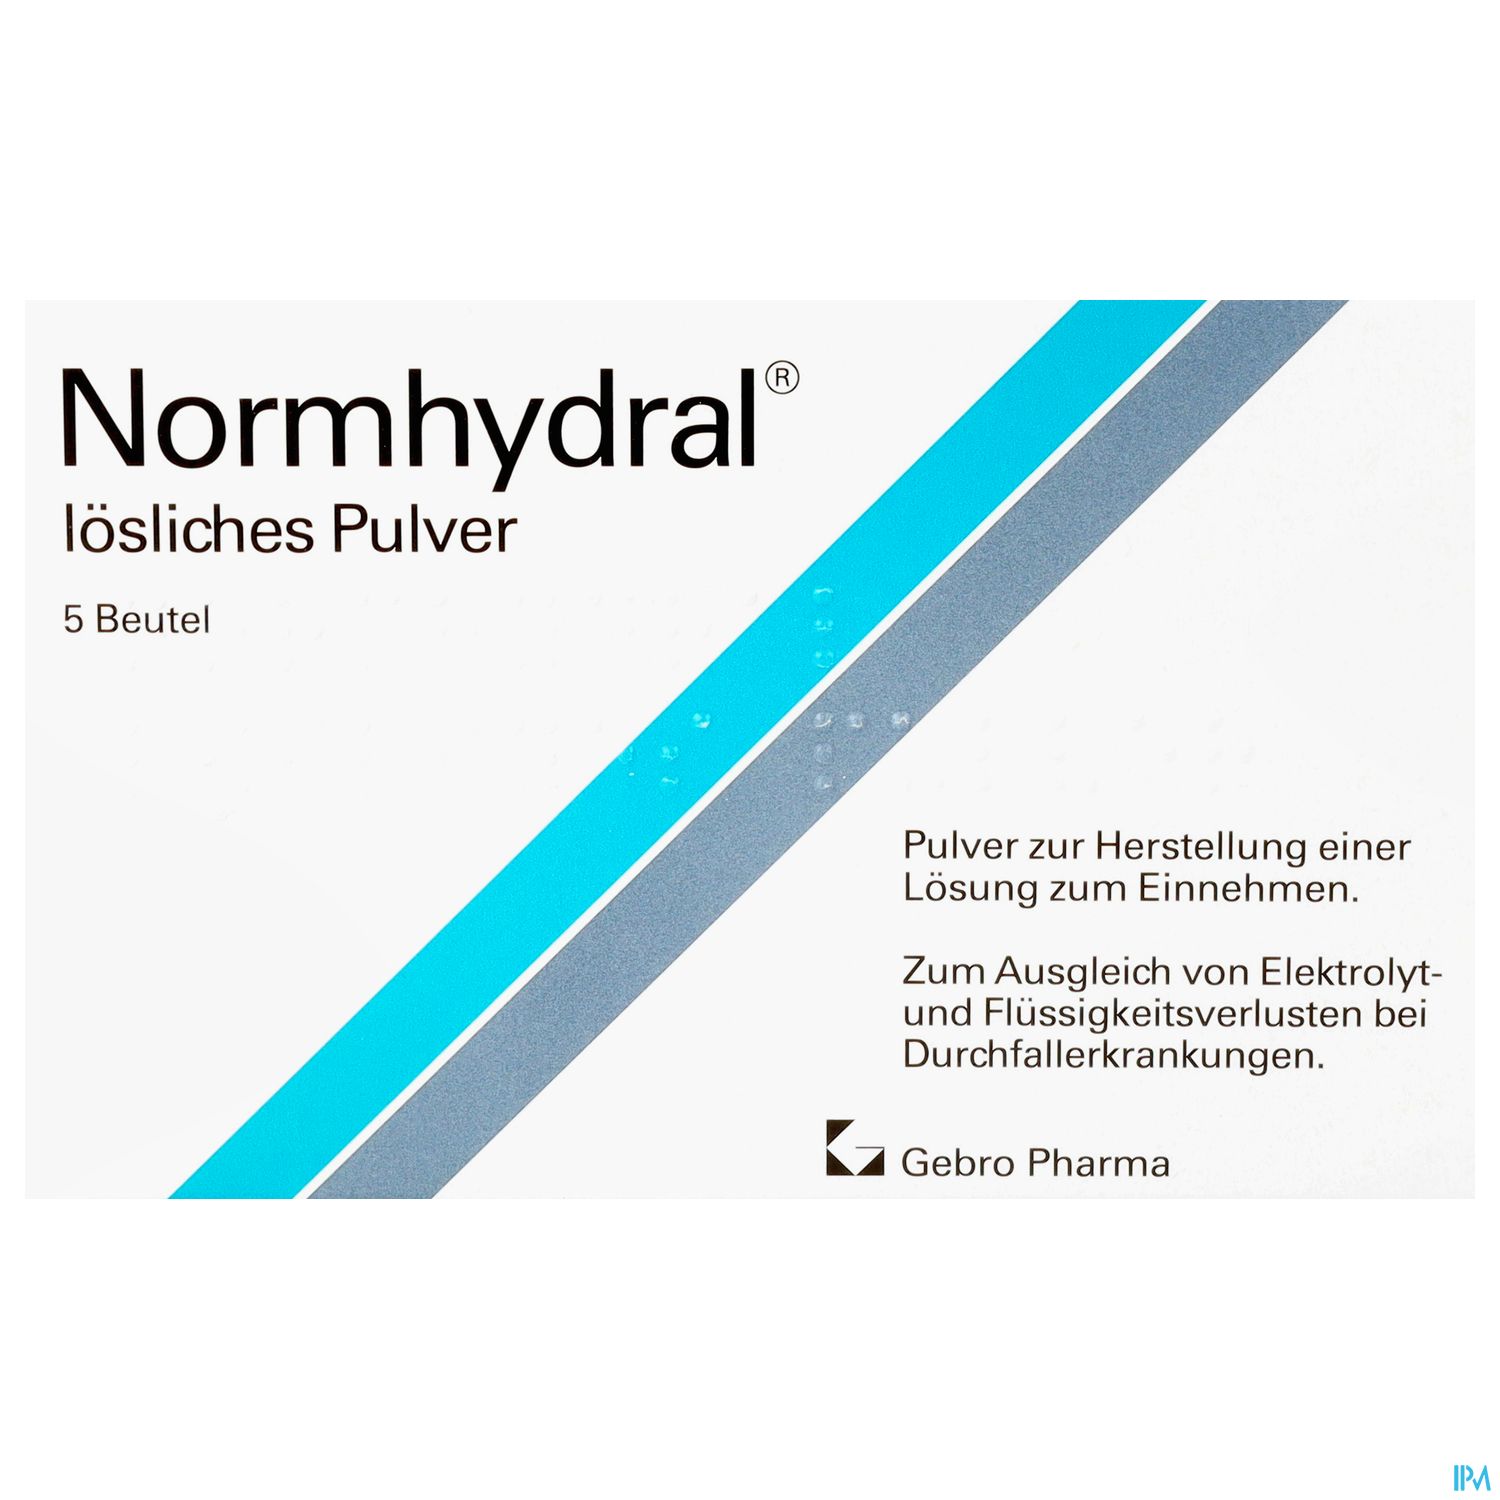 Normhydral - lösliches Pulver